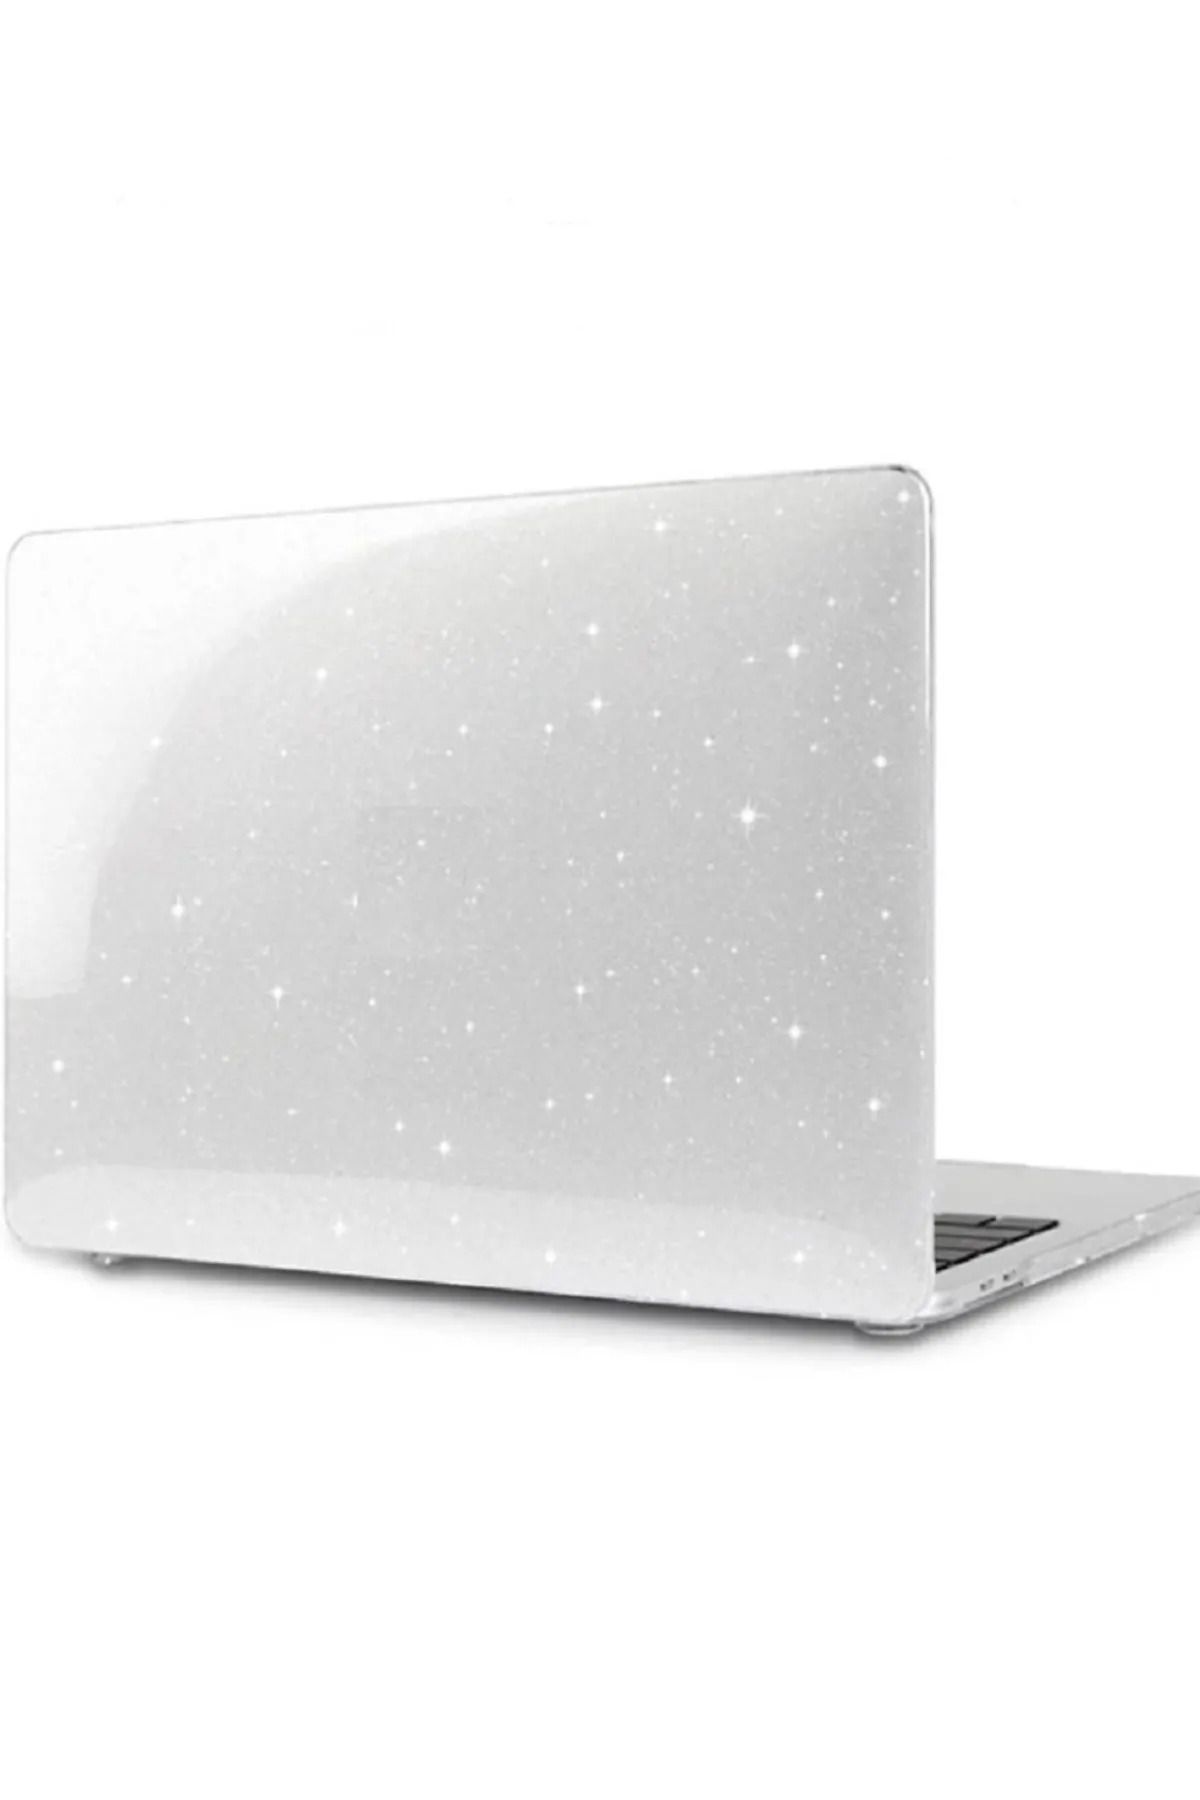 Fibaks Apple Macbook Air 13.3 Air M1 2020 Kılıf A1932 - A2174 - A2337 Simli Parlak Transparan Kapak